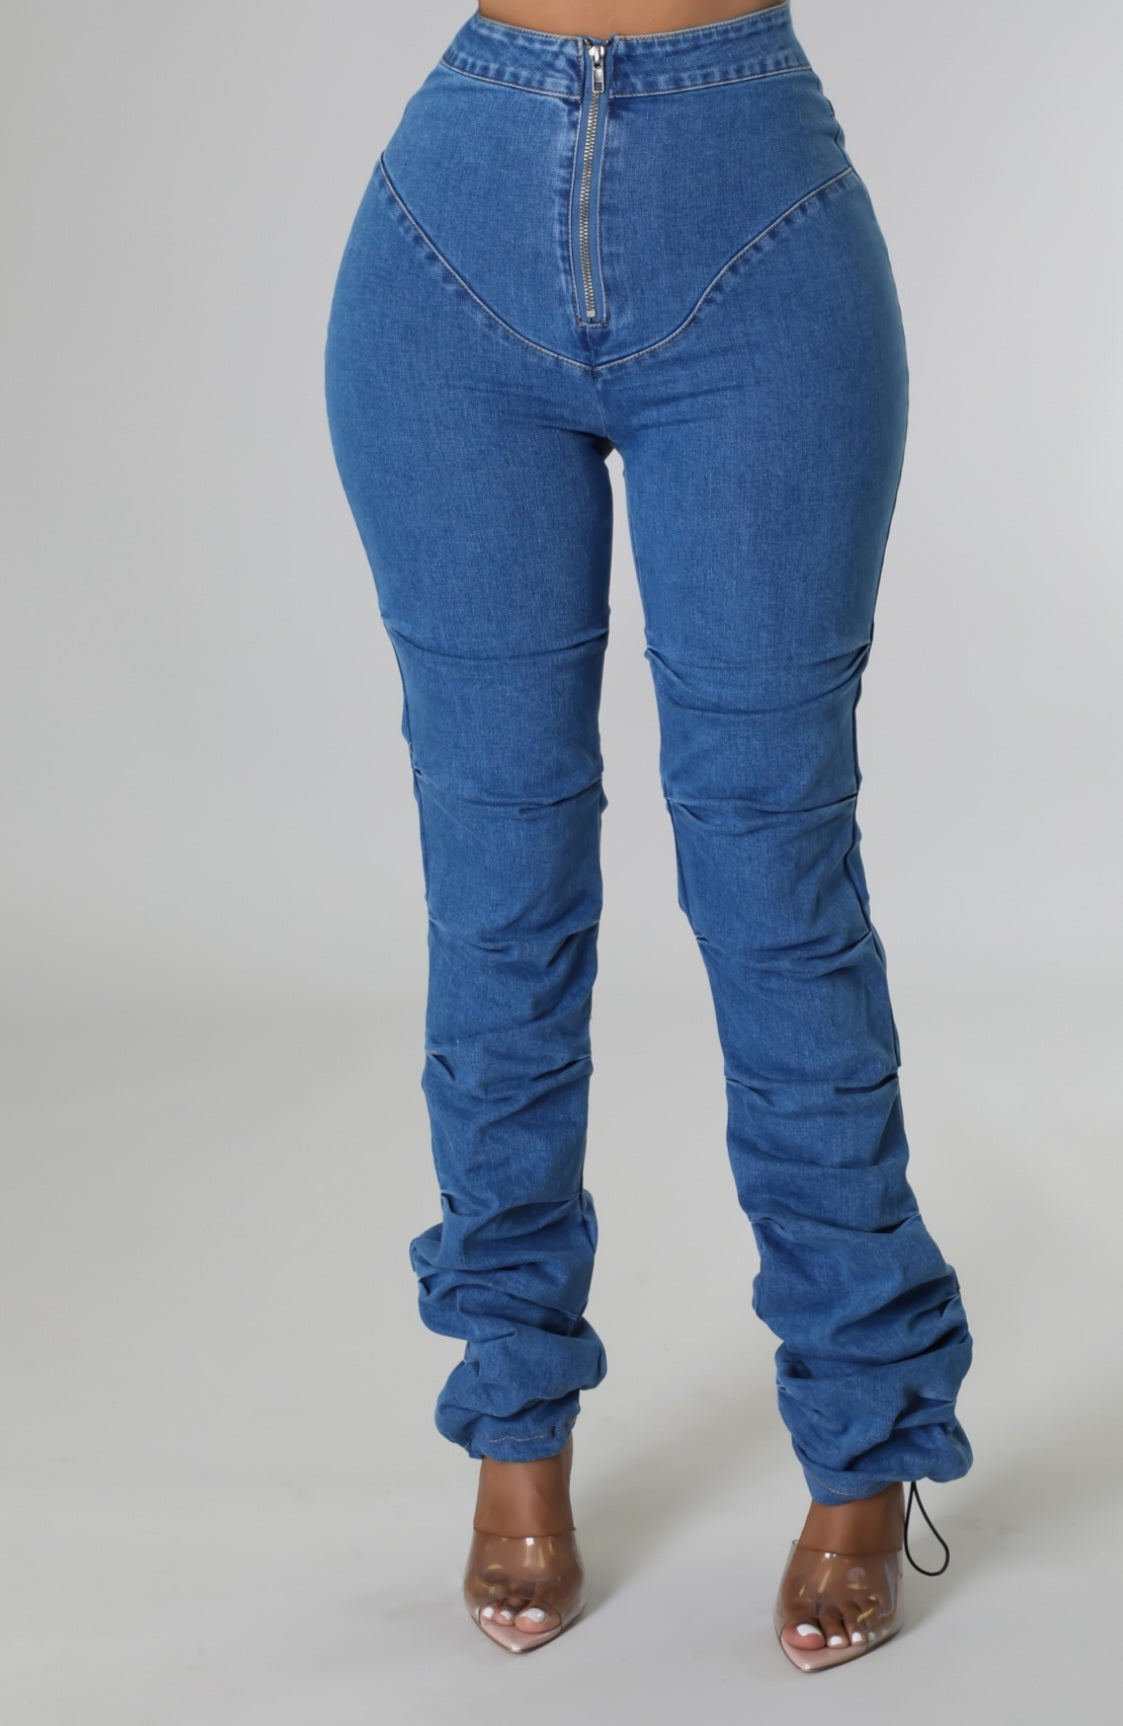 Kayla Denim Jeans (Medium Dark)